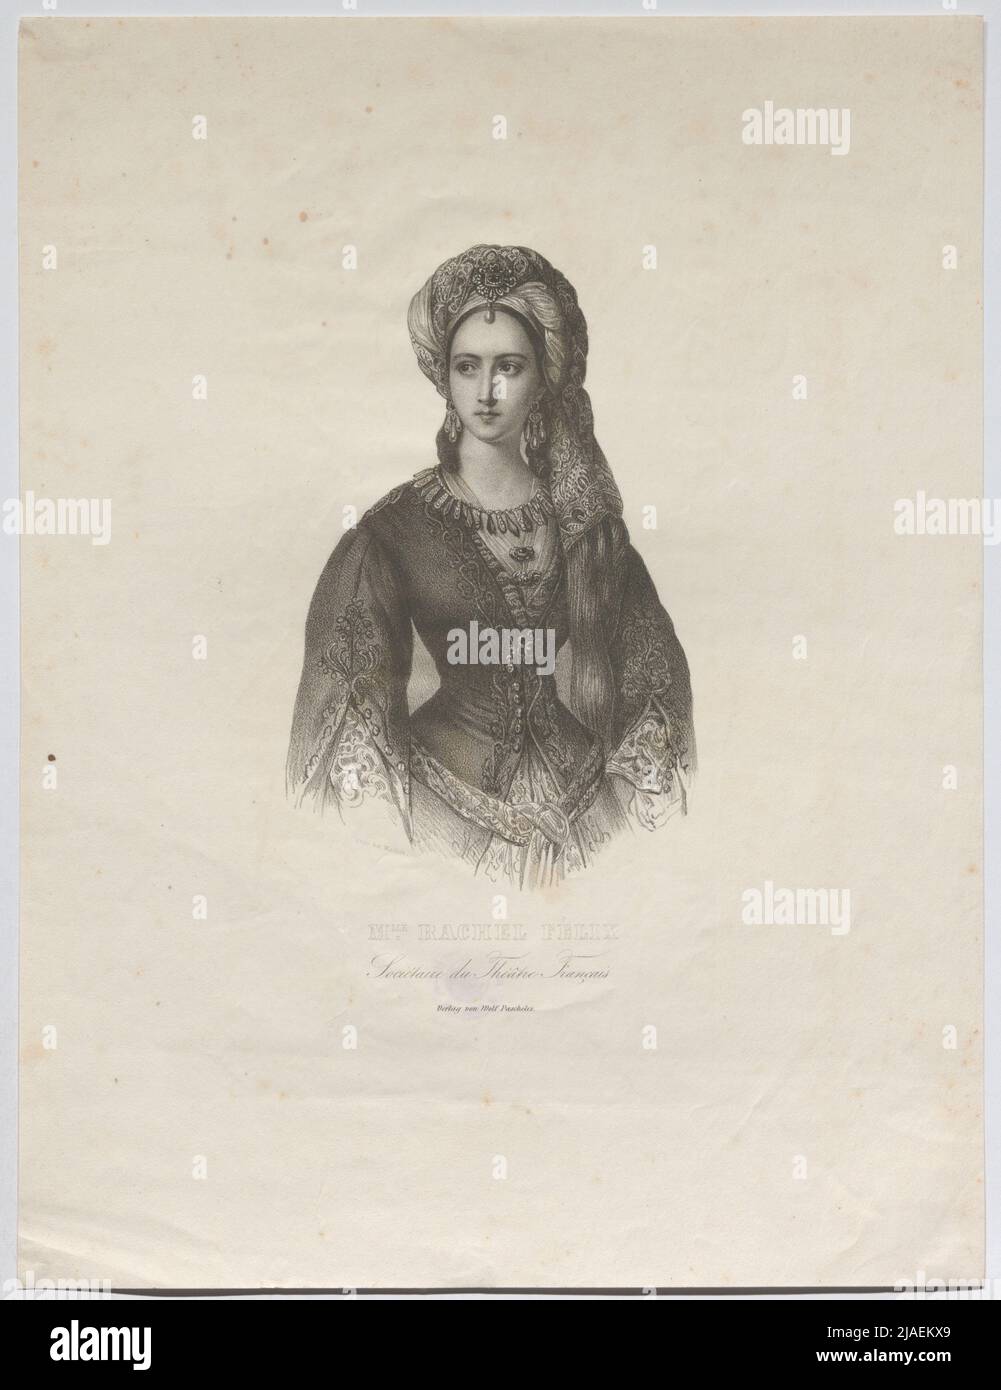 Mlle. RANKLE Ferg Theonyri, Franki Brandalers Français '. Diring Houen Degon de Thure Avent, Ailoglt), lit iterieren dies (1775-18), lit iographics Stockfoto